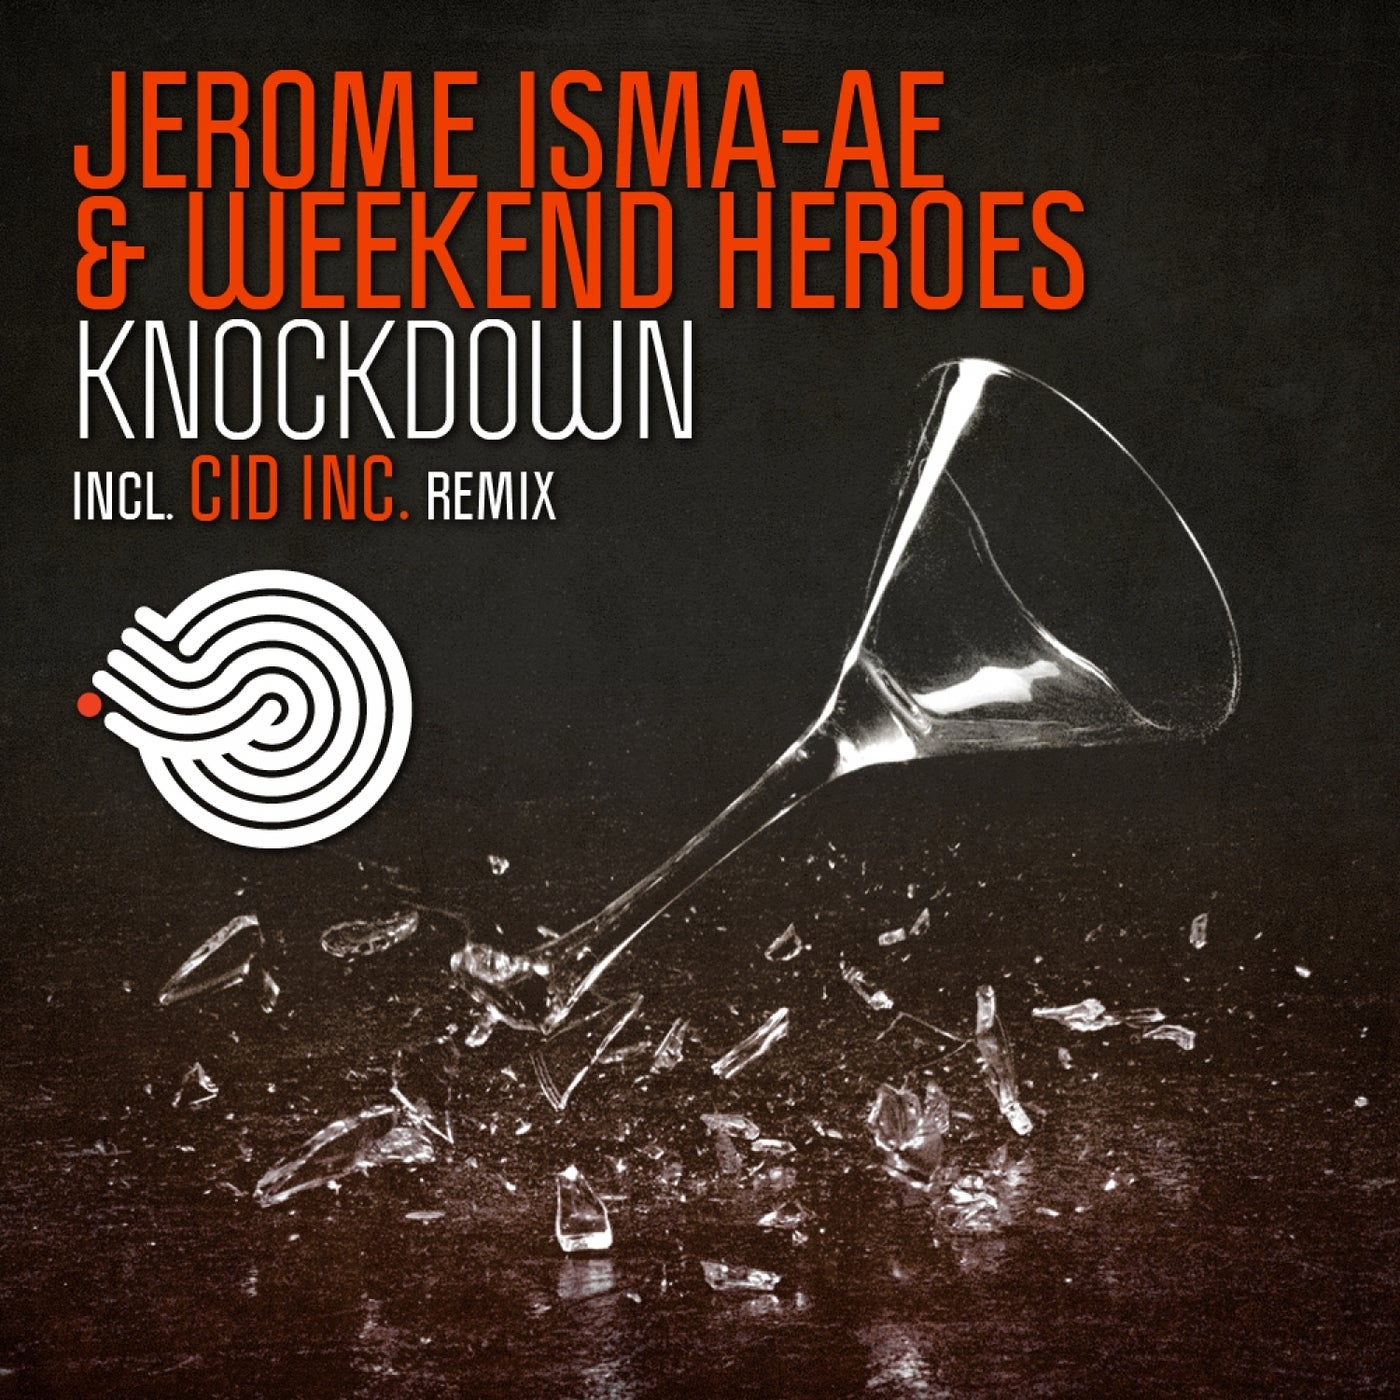 Weekend heroes. Jerome Isma-AE. Джером ремикс музыкальное Издательство. Knockdown песня. Poison Pro Wake up CID Inc Remix.